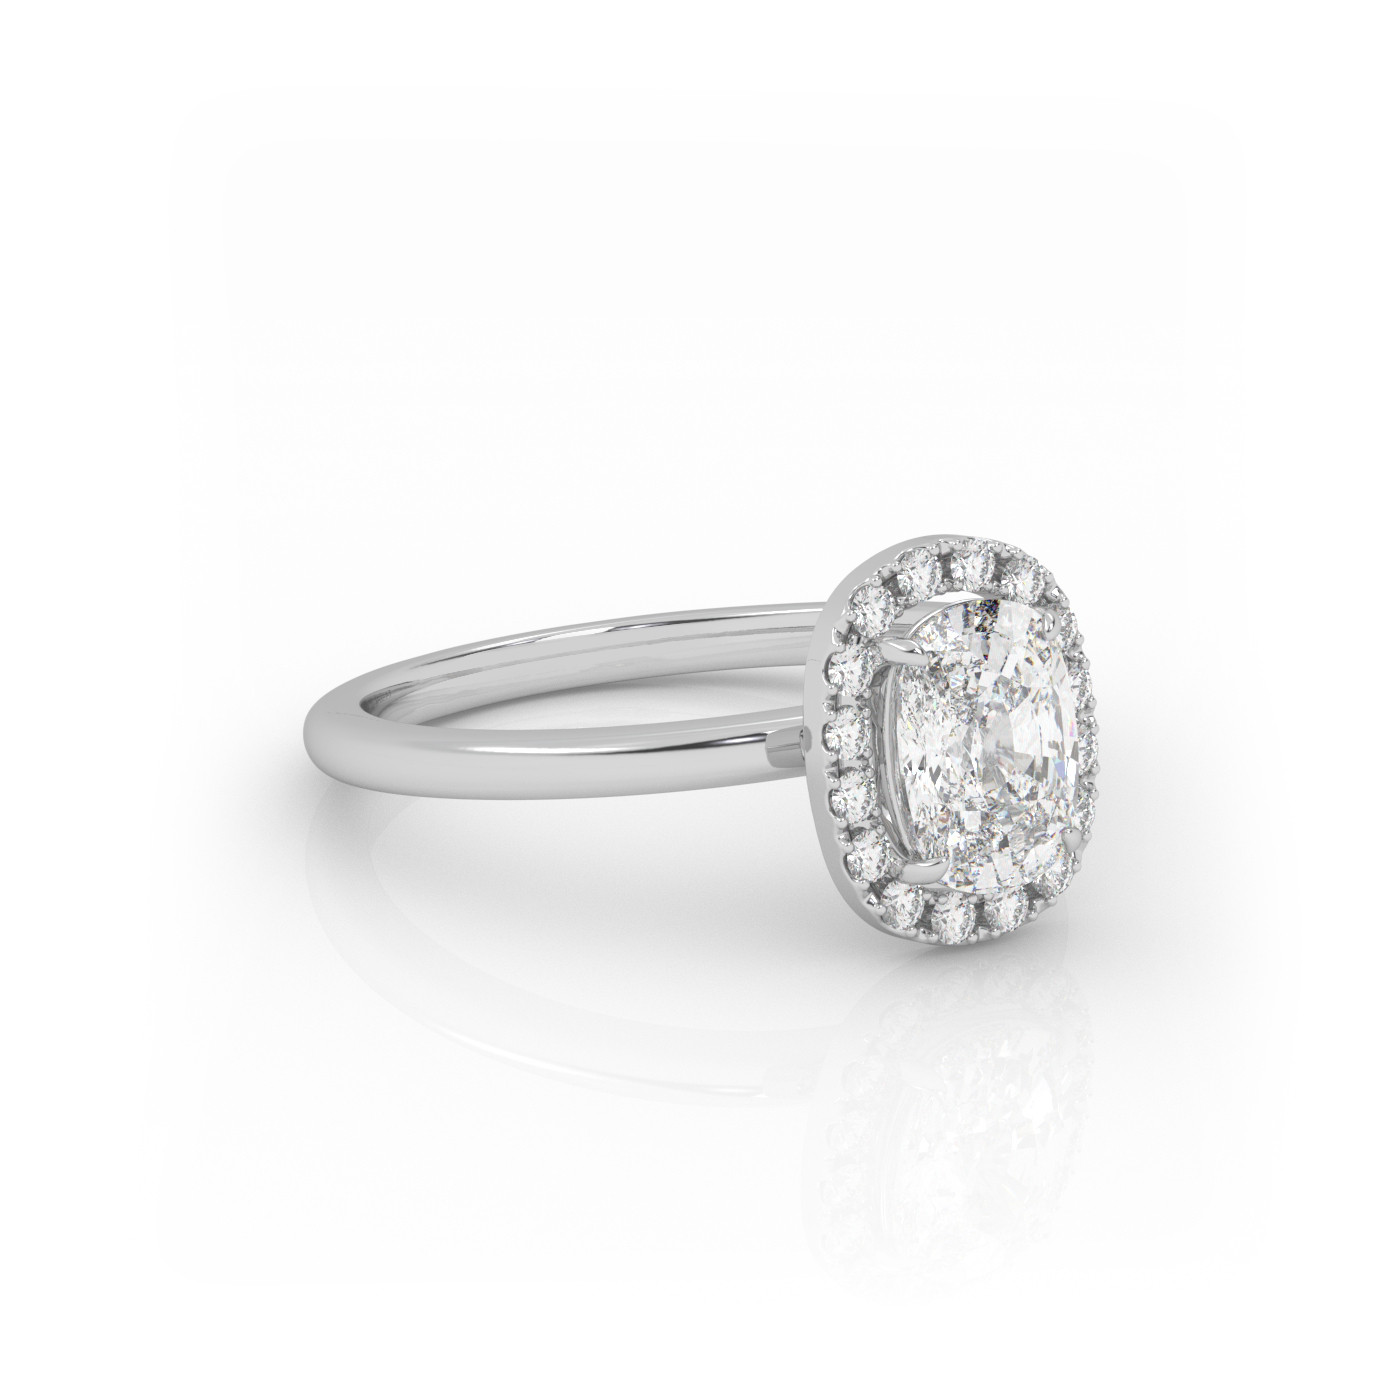 18K WHITE GOLD Elongated Cushion Cut Diamond Ring With Halo Style